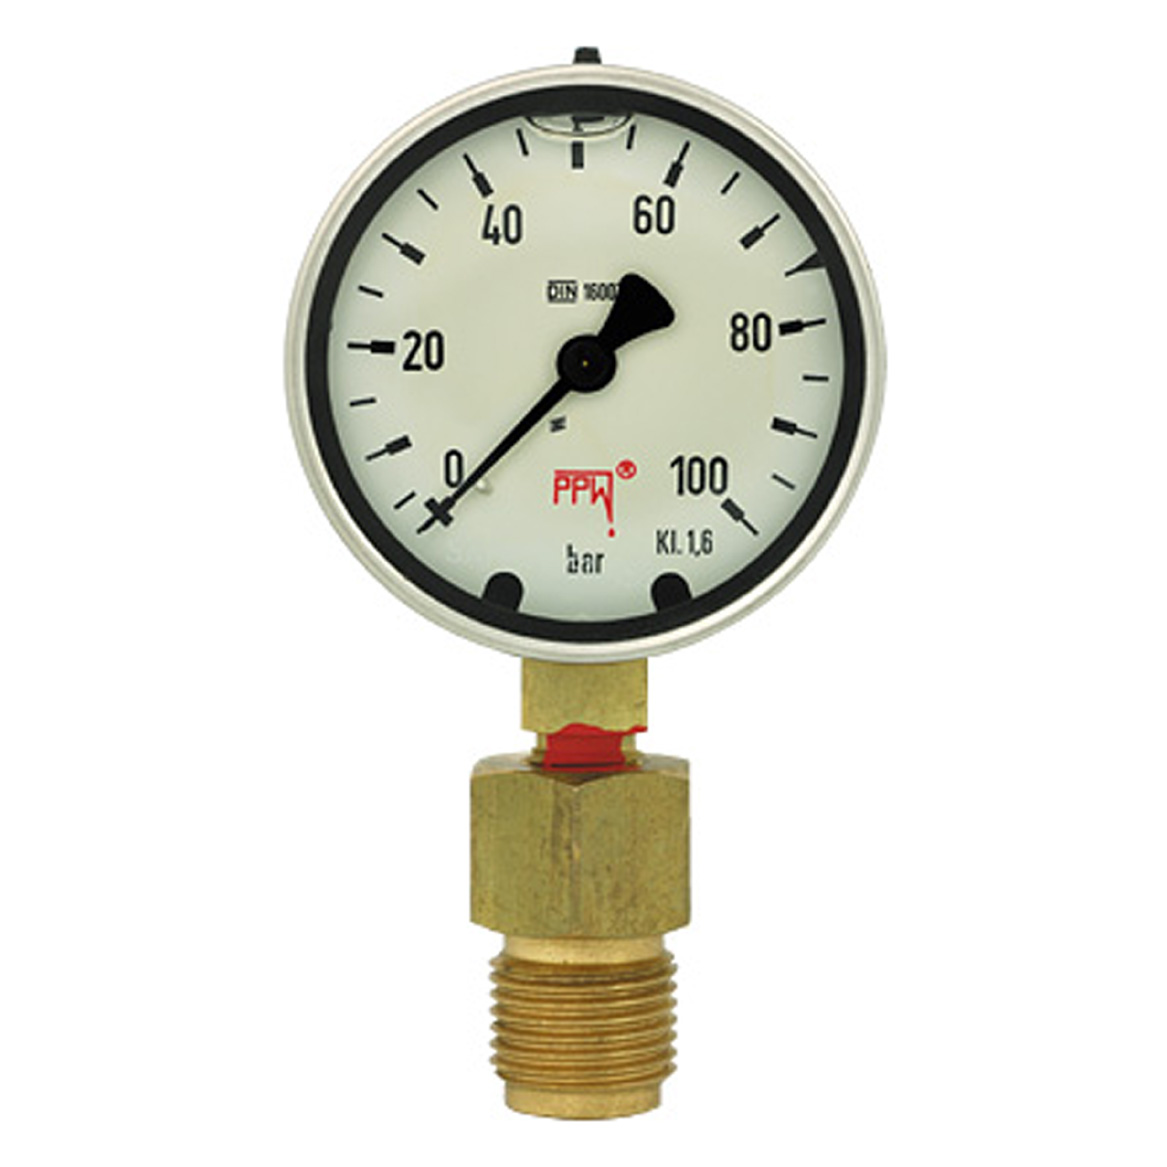 Standard pressure gauge with teflon diaphragm